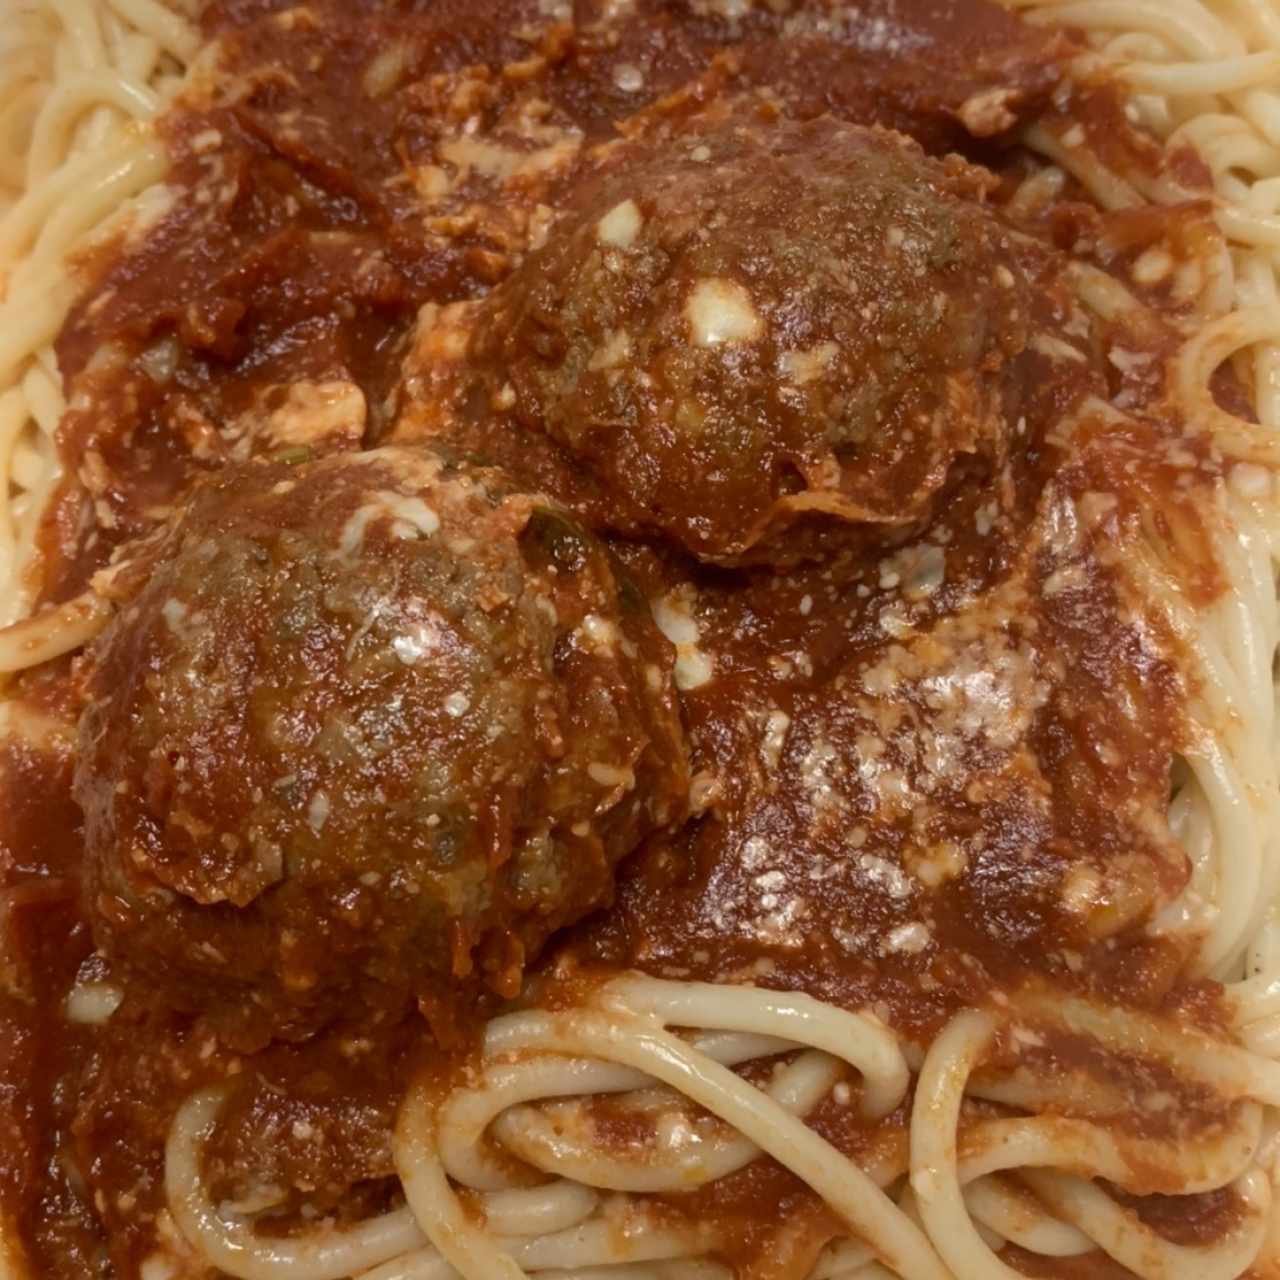 Spaghetti con Albóndigas